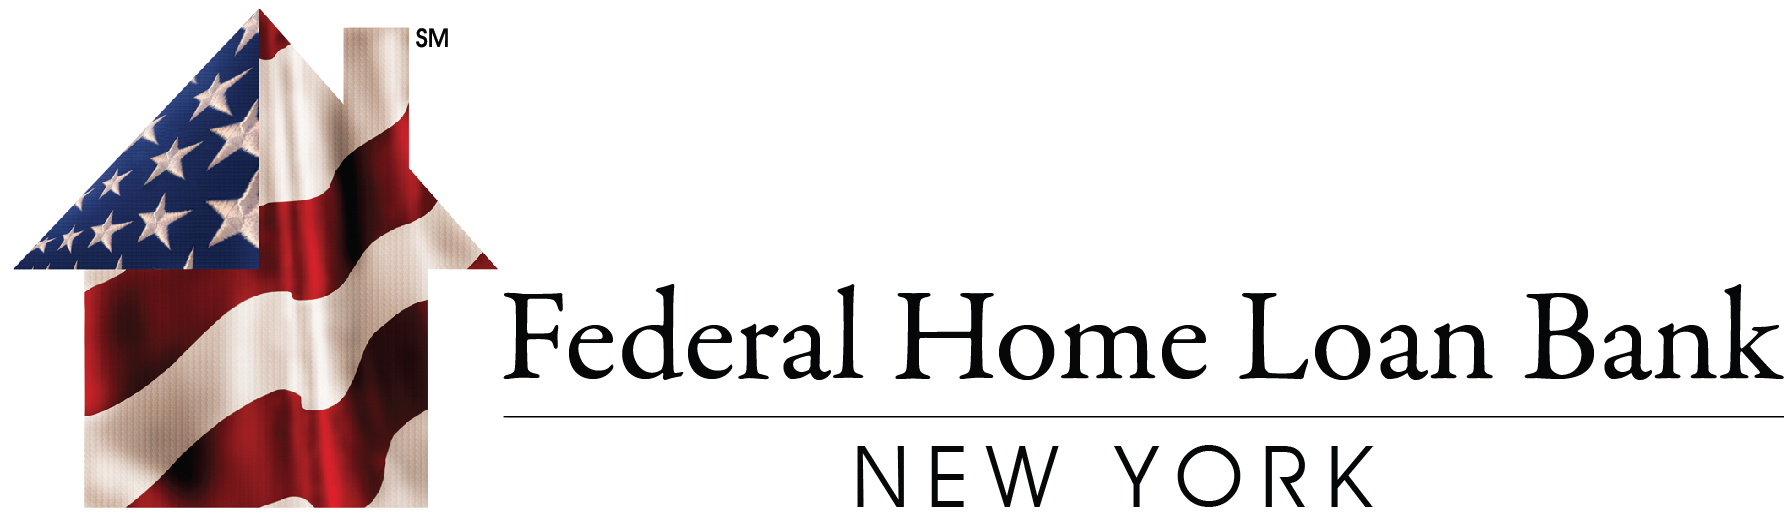 Federal Home Loan Bank New York logo